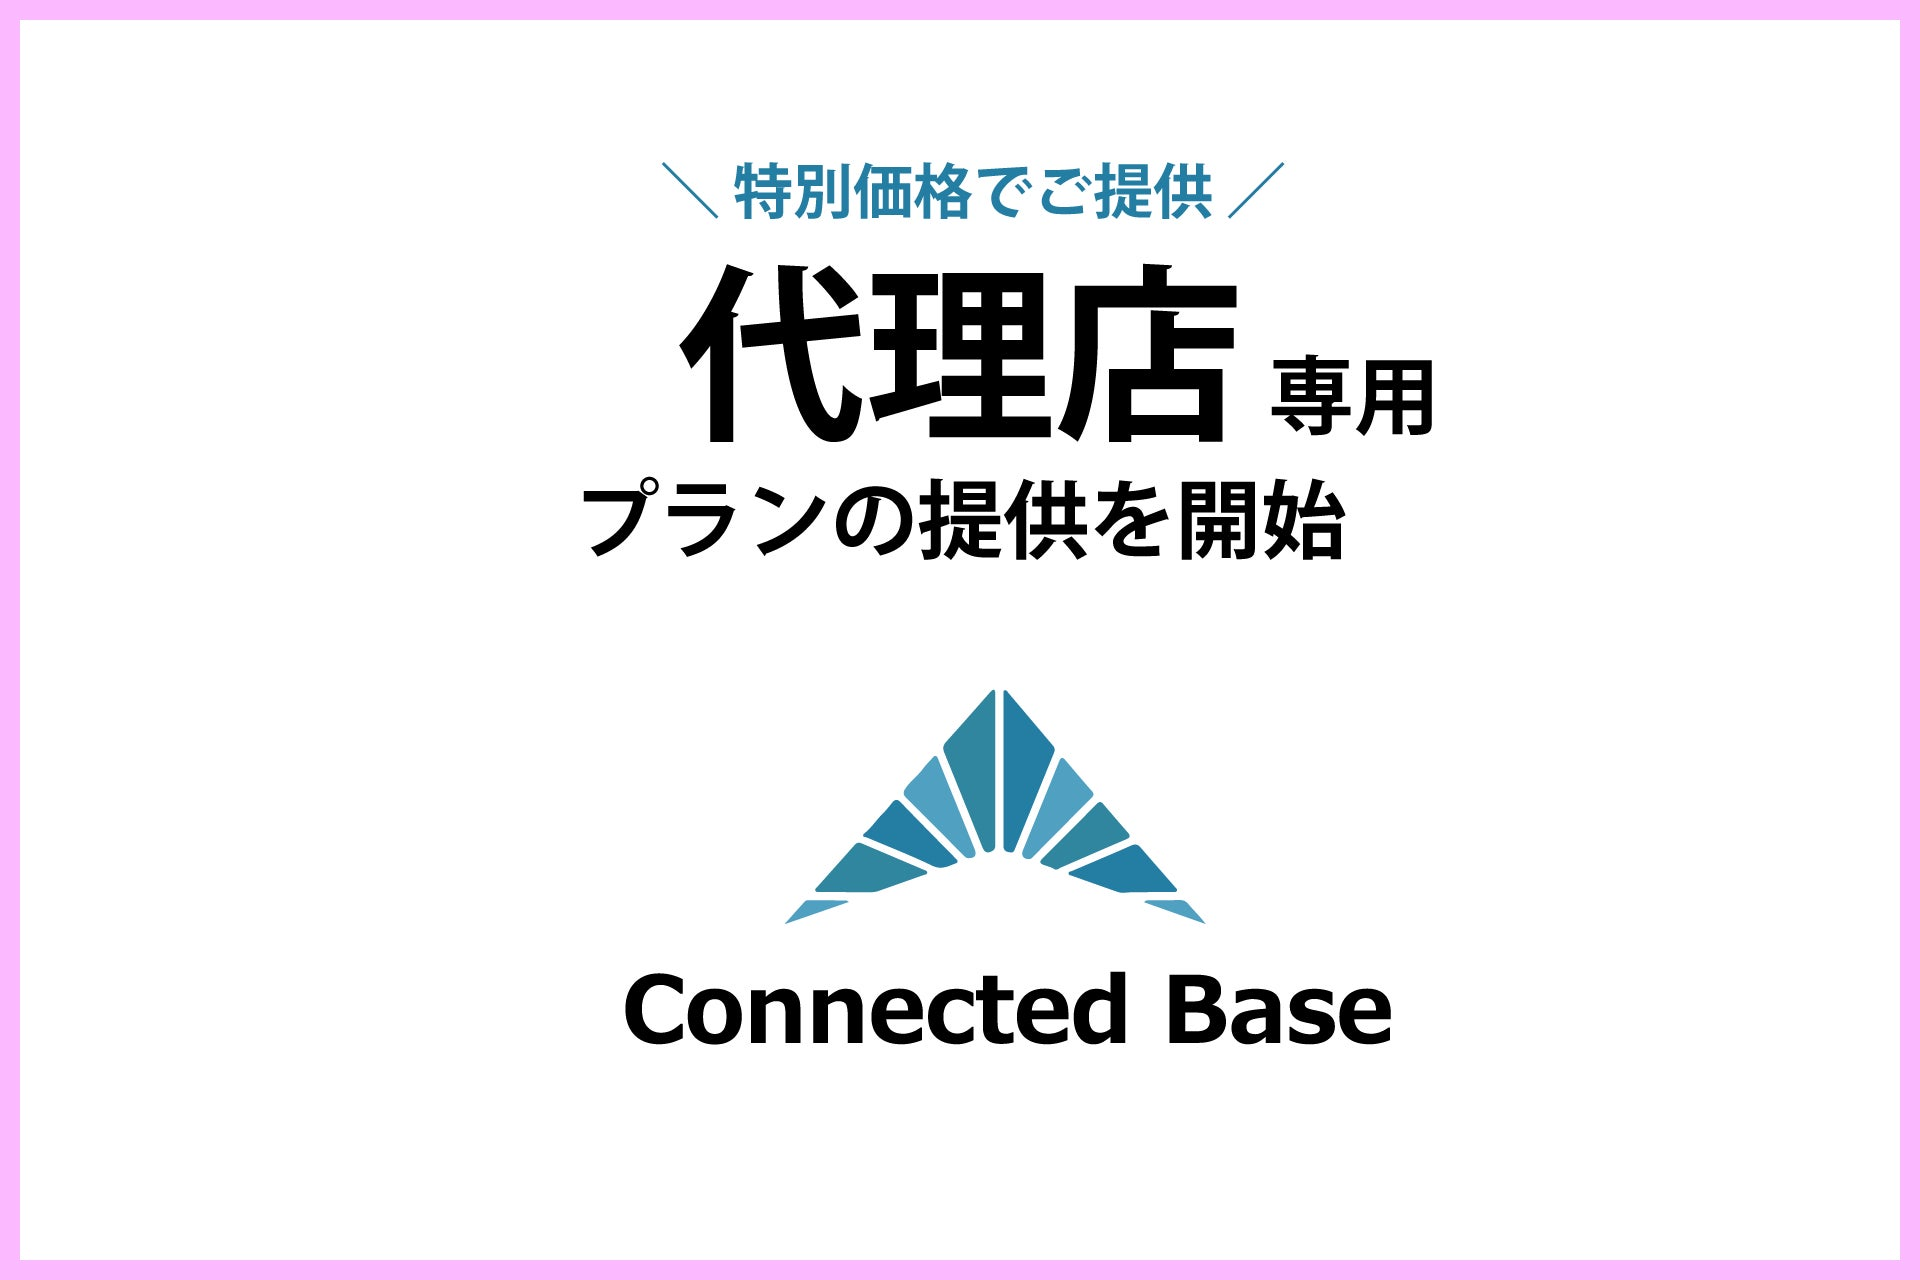 Connected Base for 電子帳簿保存法に『代理店向けプラン』の提供を開始